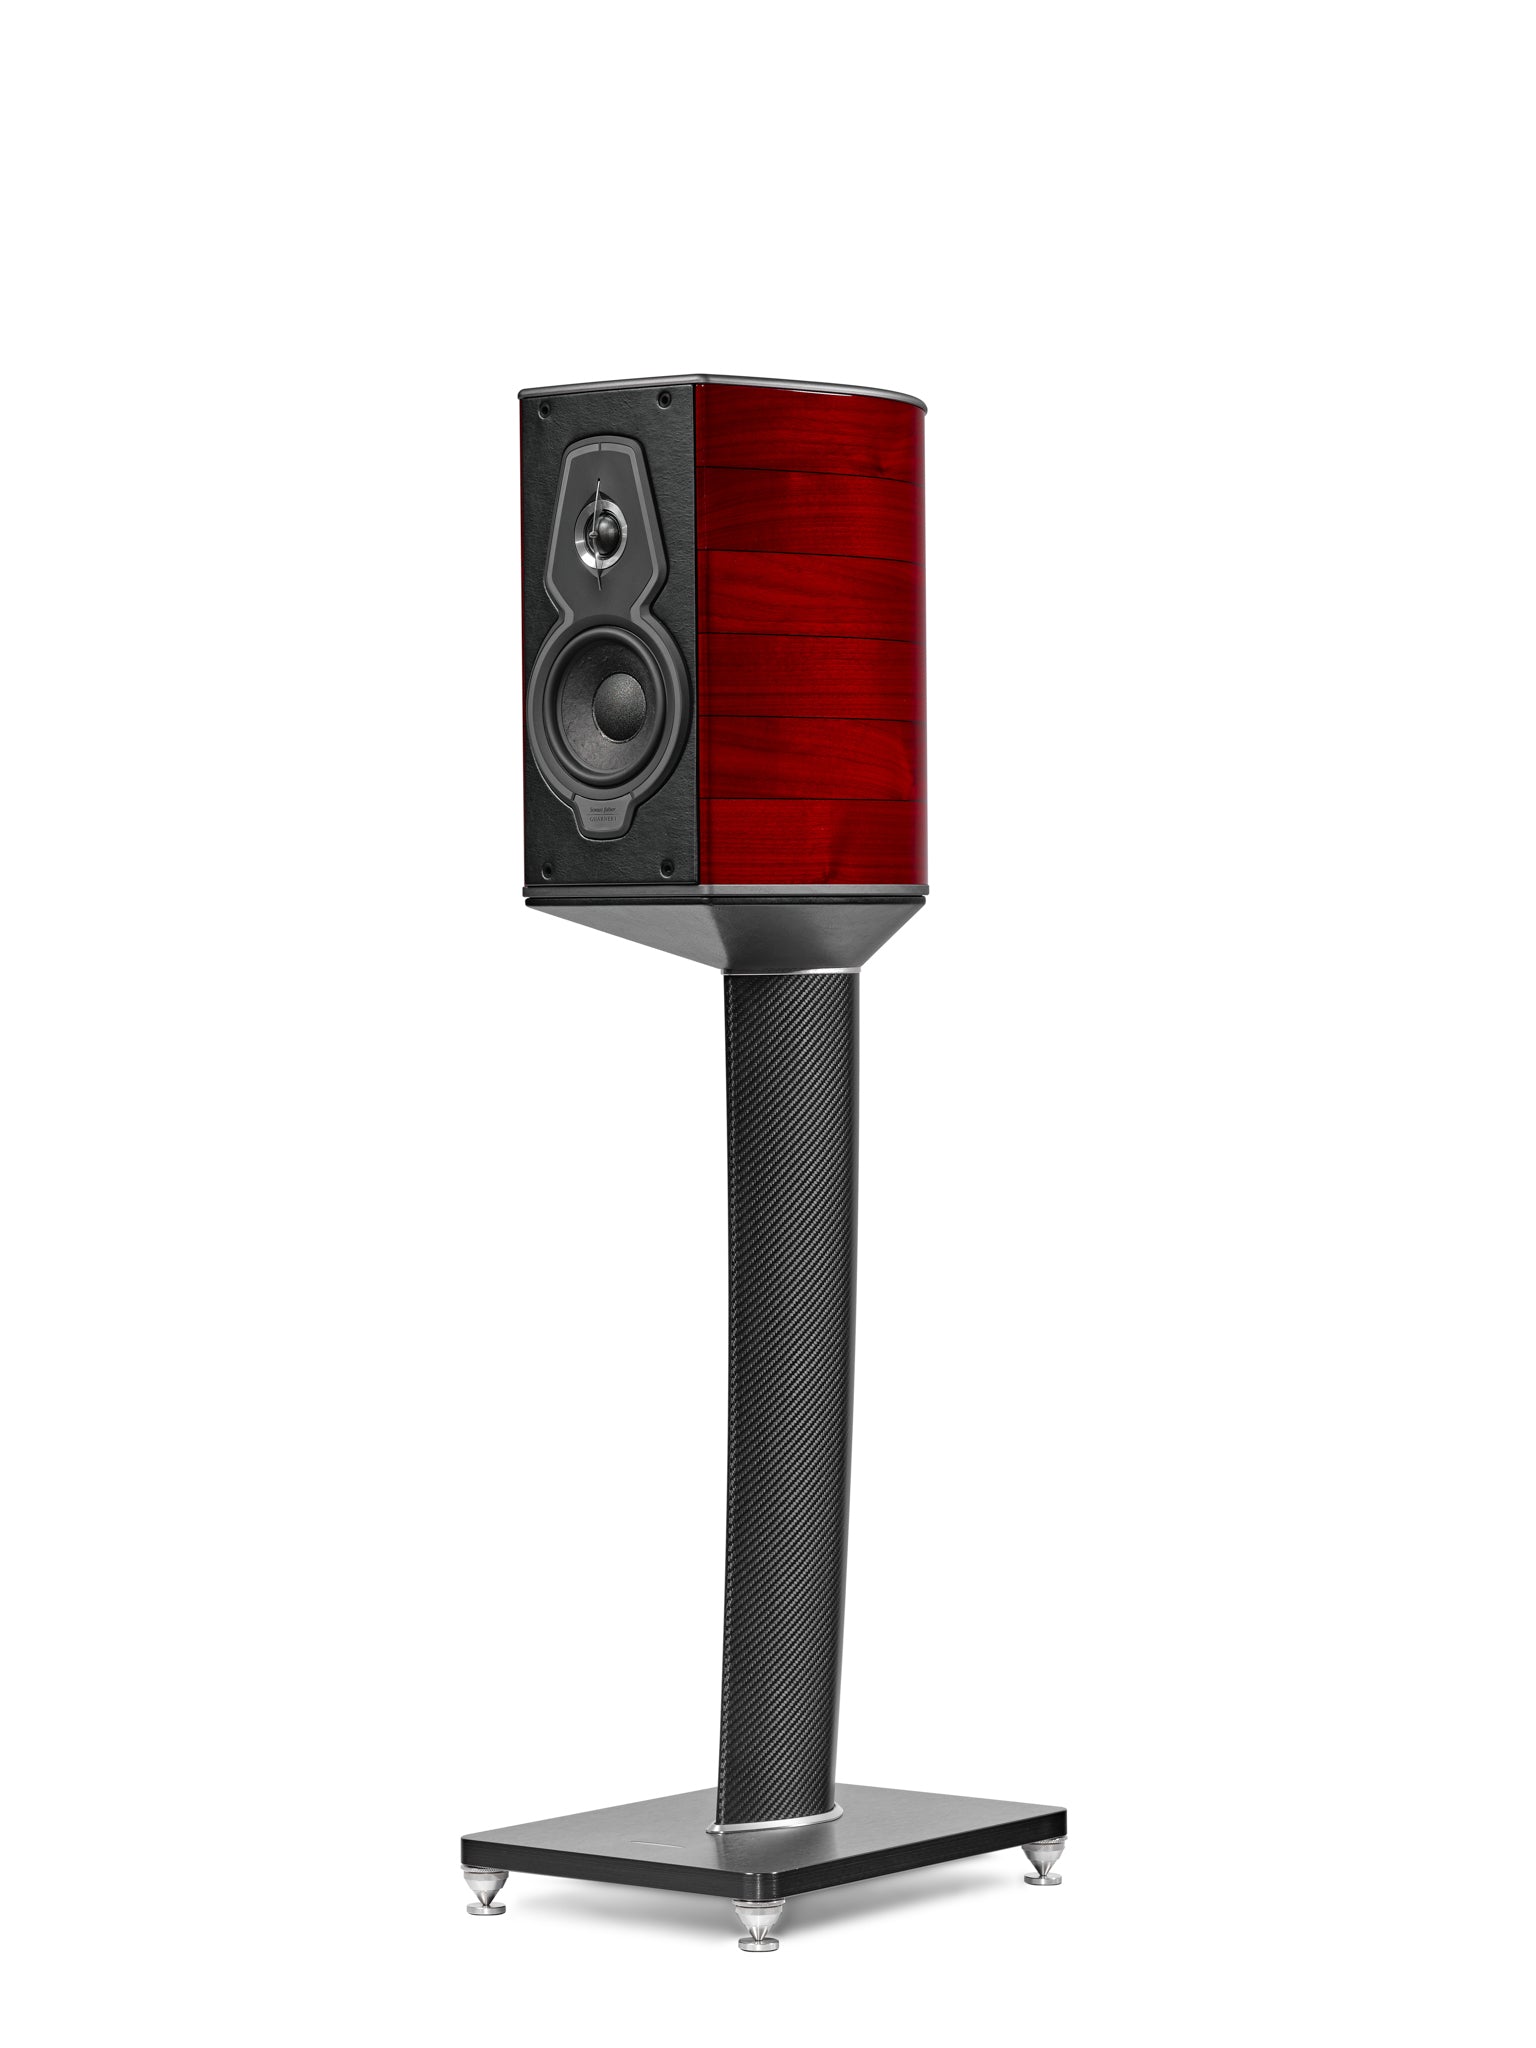 Sonus Faber Homage Guarneri G5 Speaker (In Store Only)